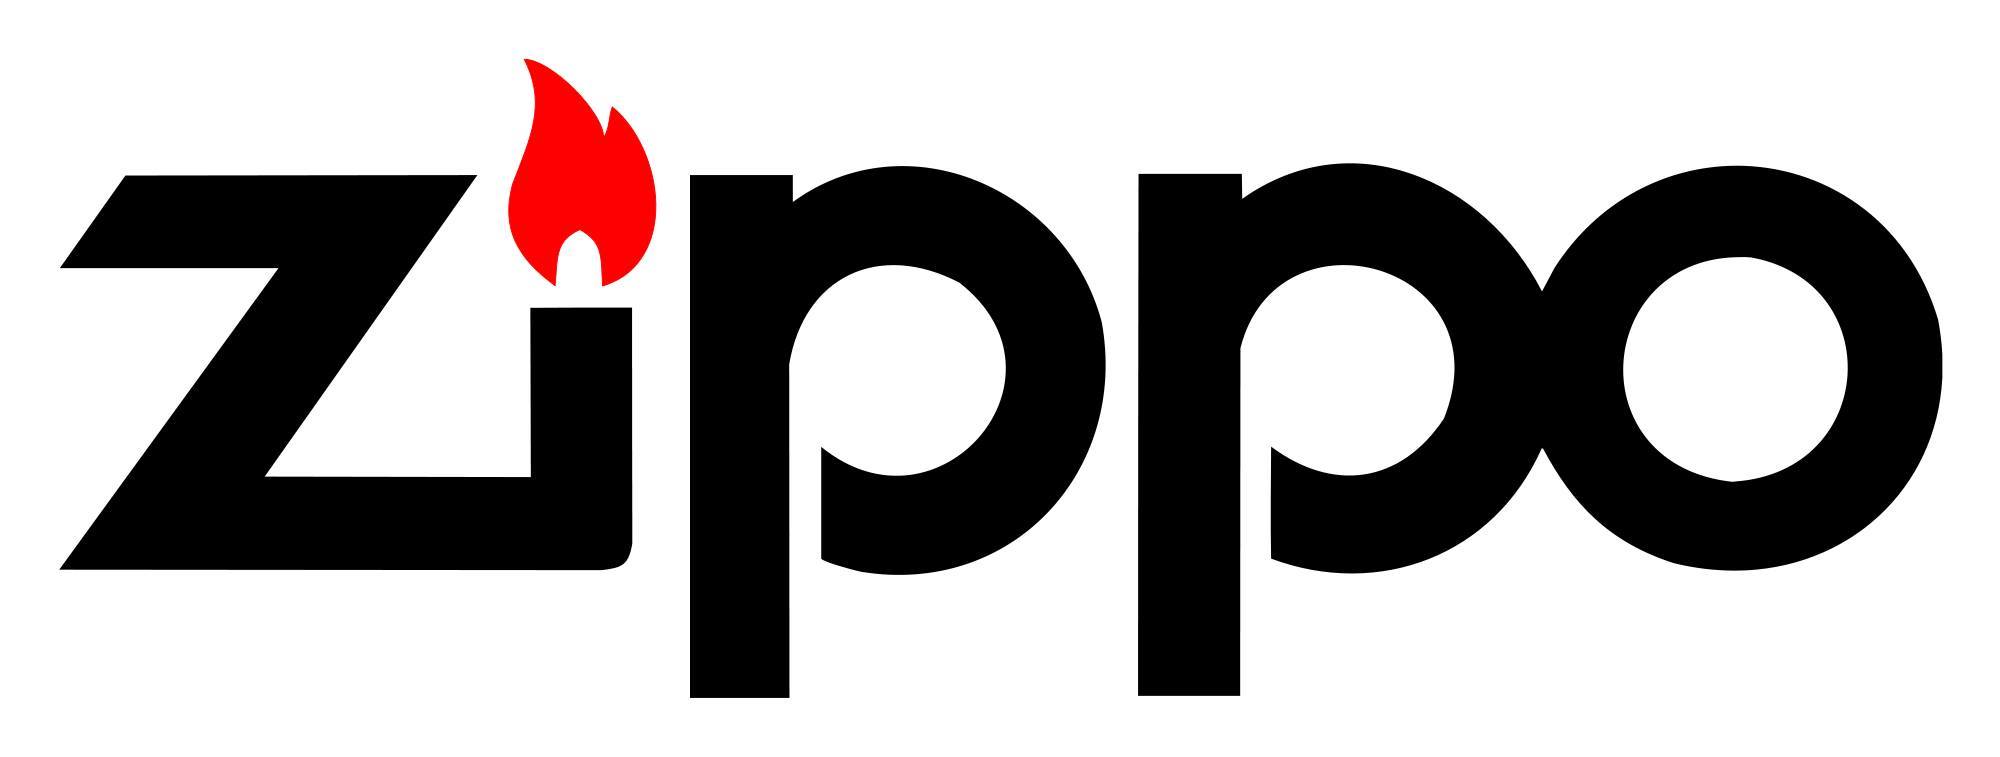 Zippo-logo